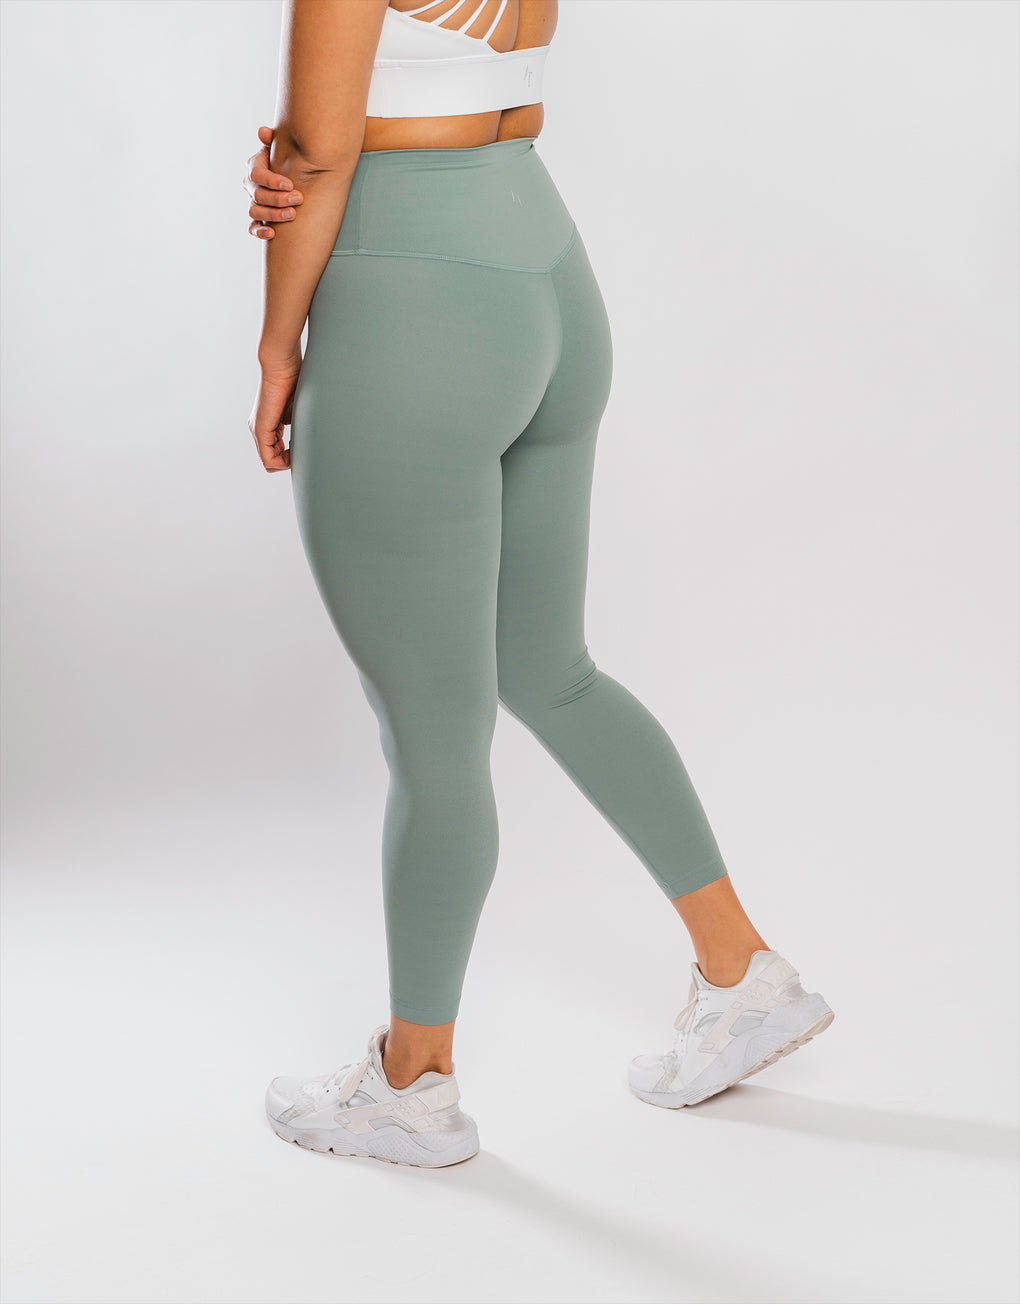 Green Three-Quarter Legging Yoga Pants - M 